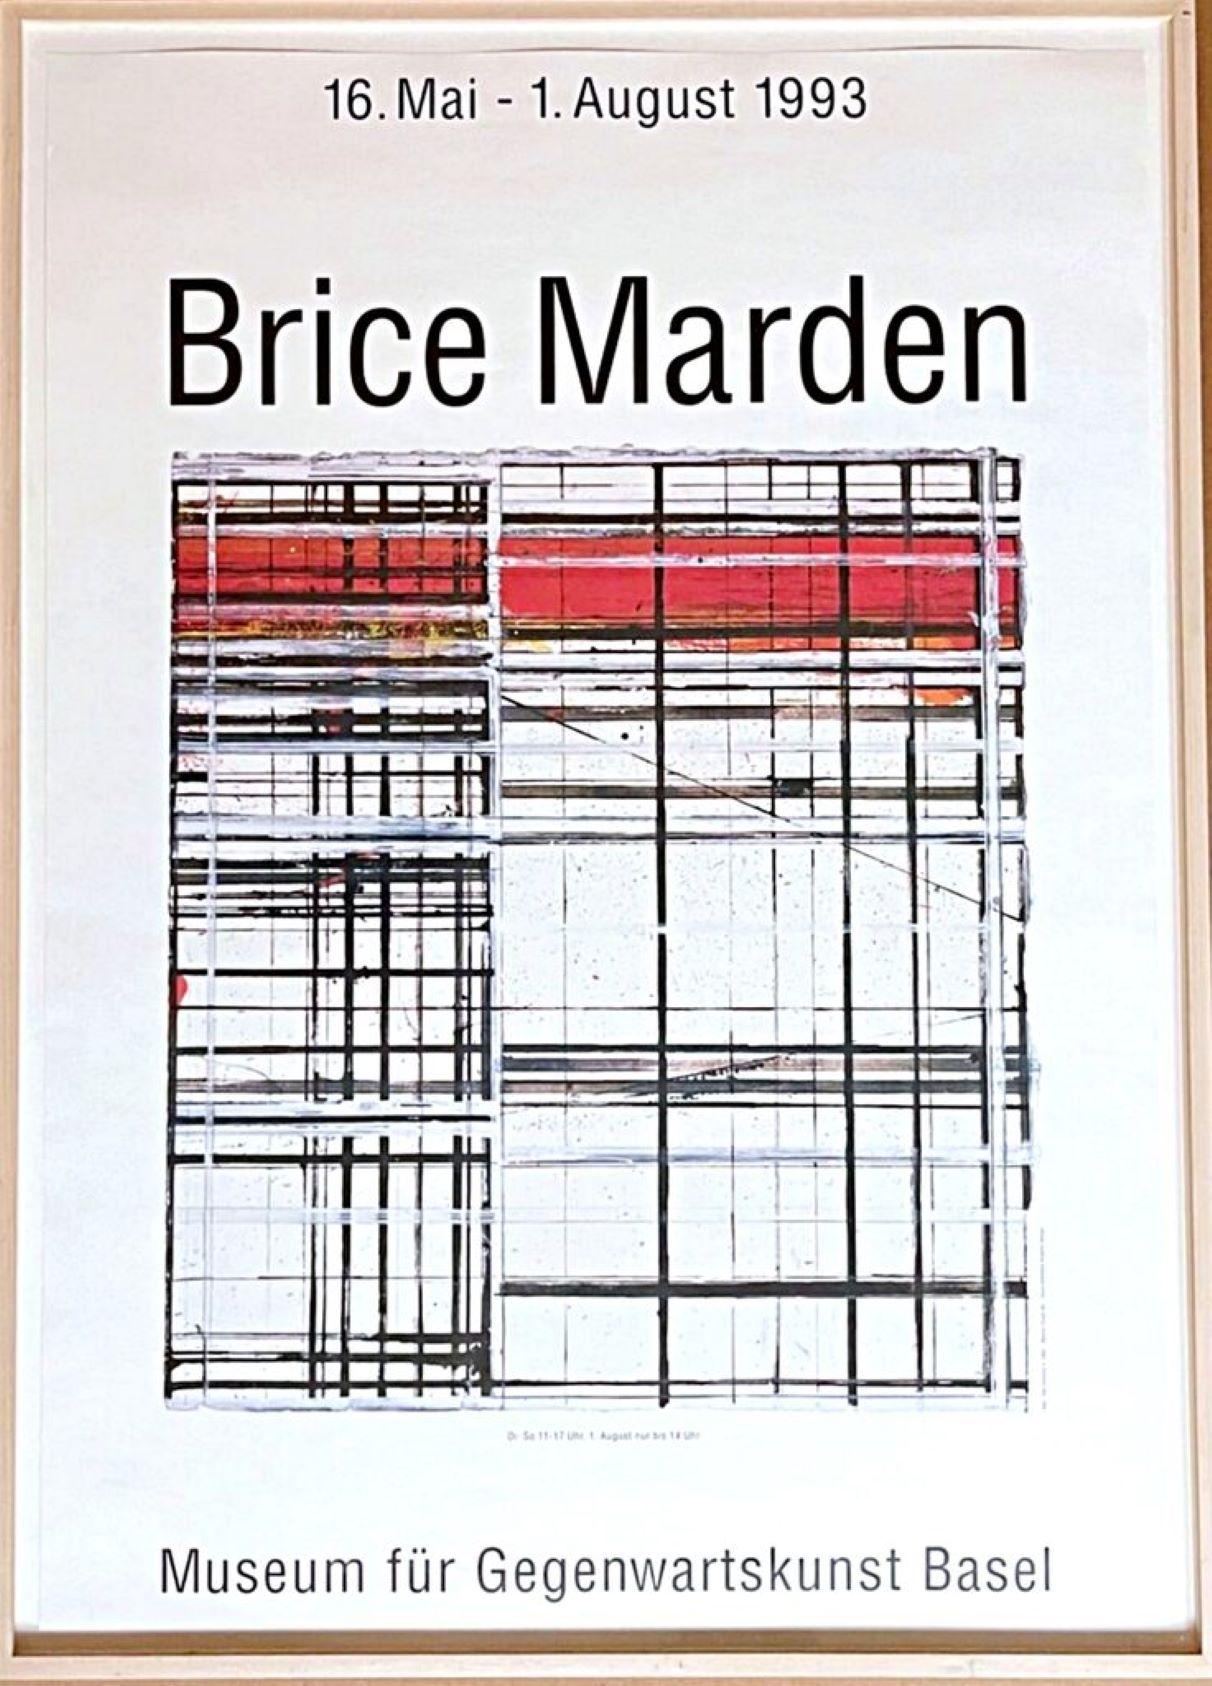 Limited Edition lithographic poster, Museum für Gegenwartskunst Basel (Framed) - Print by Brice Marden